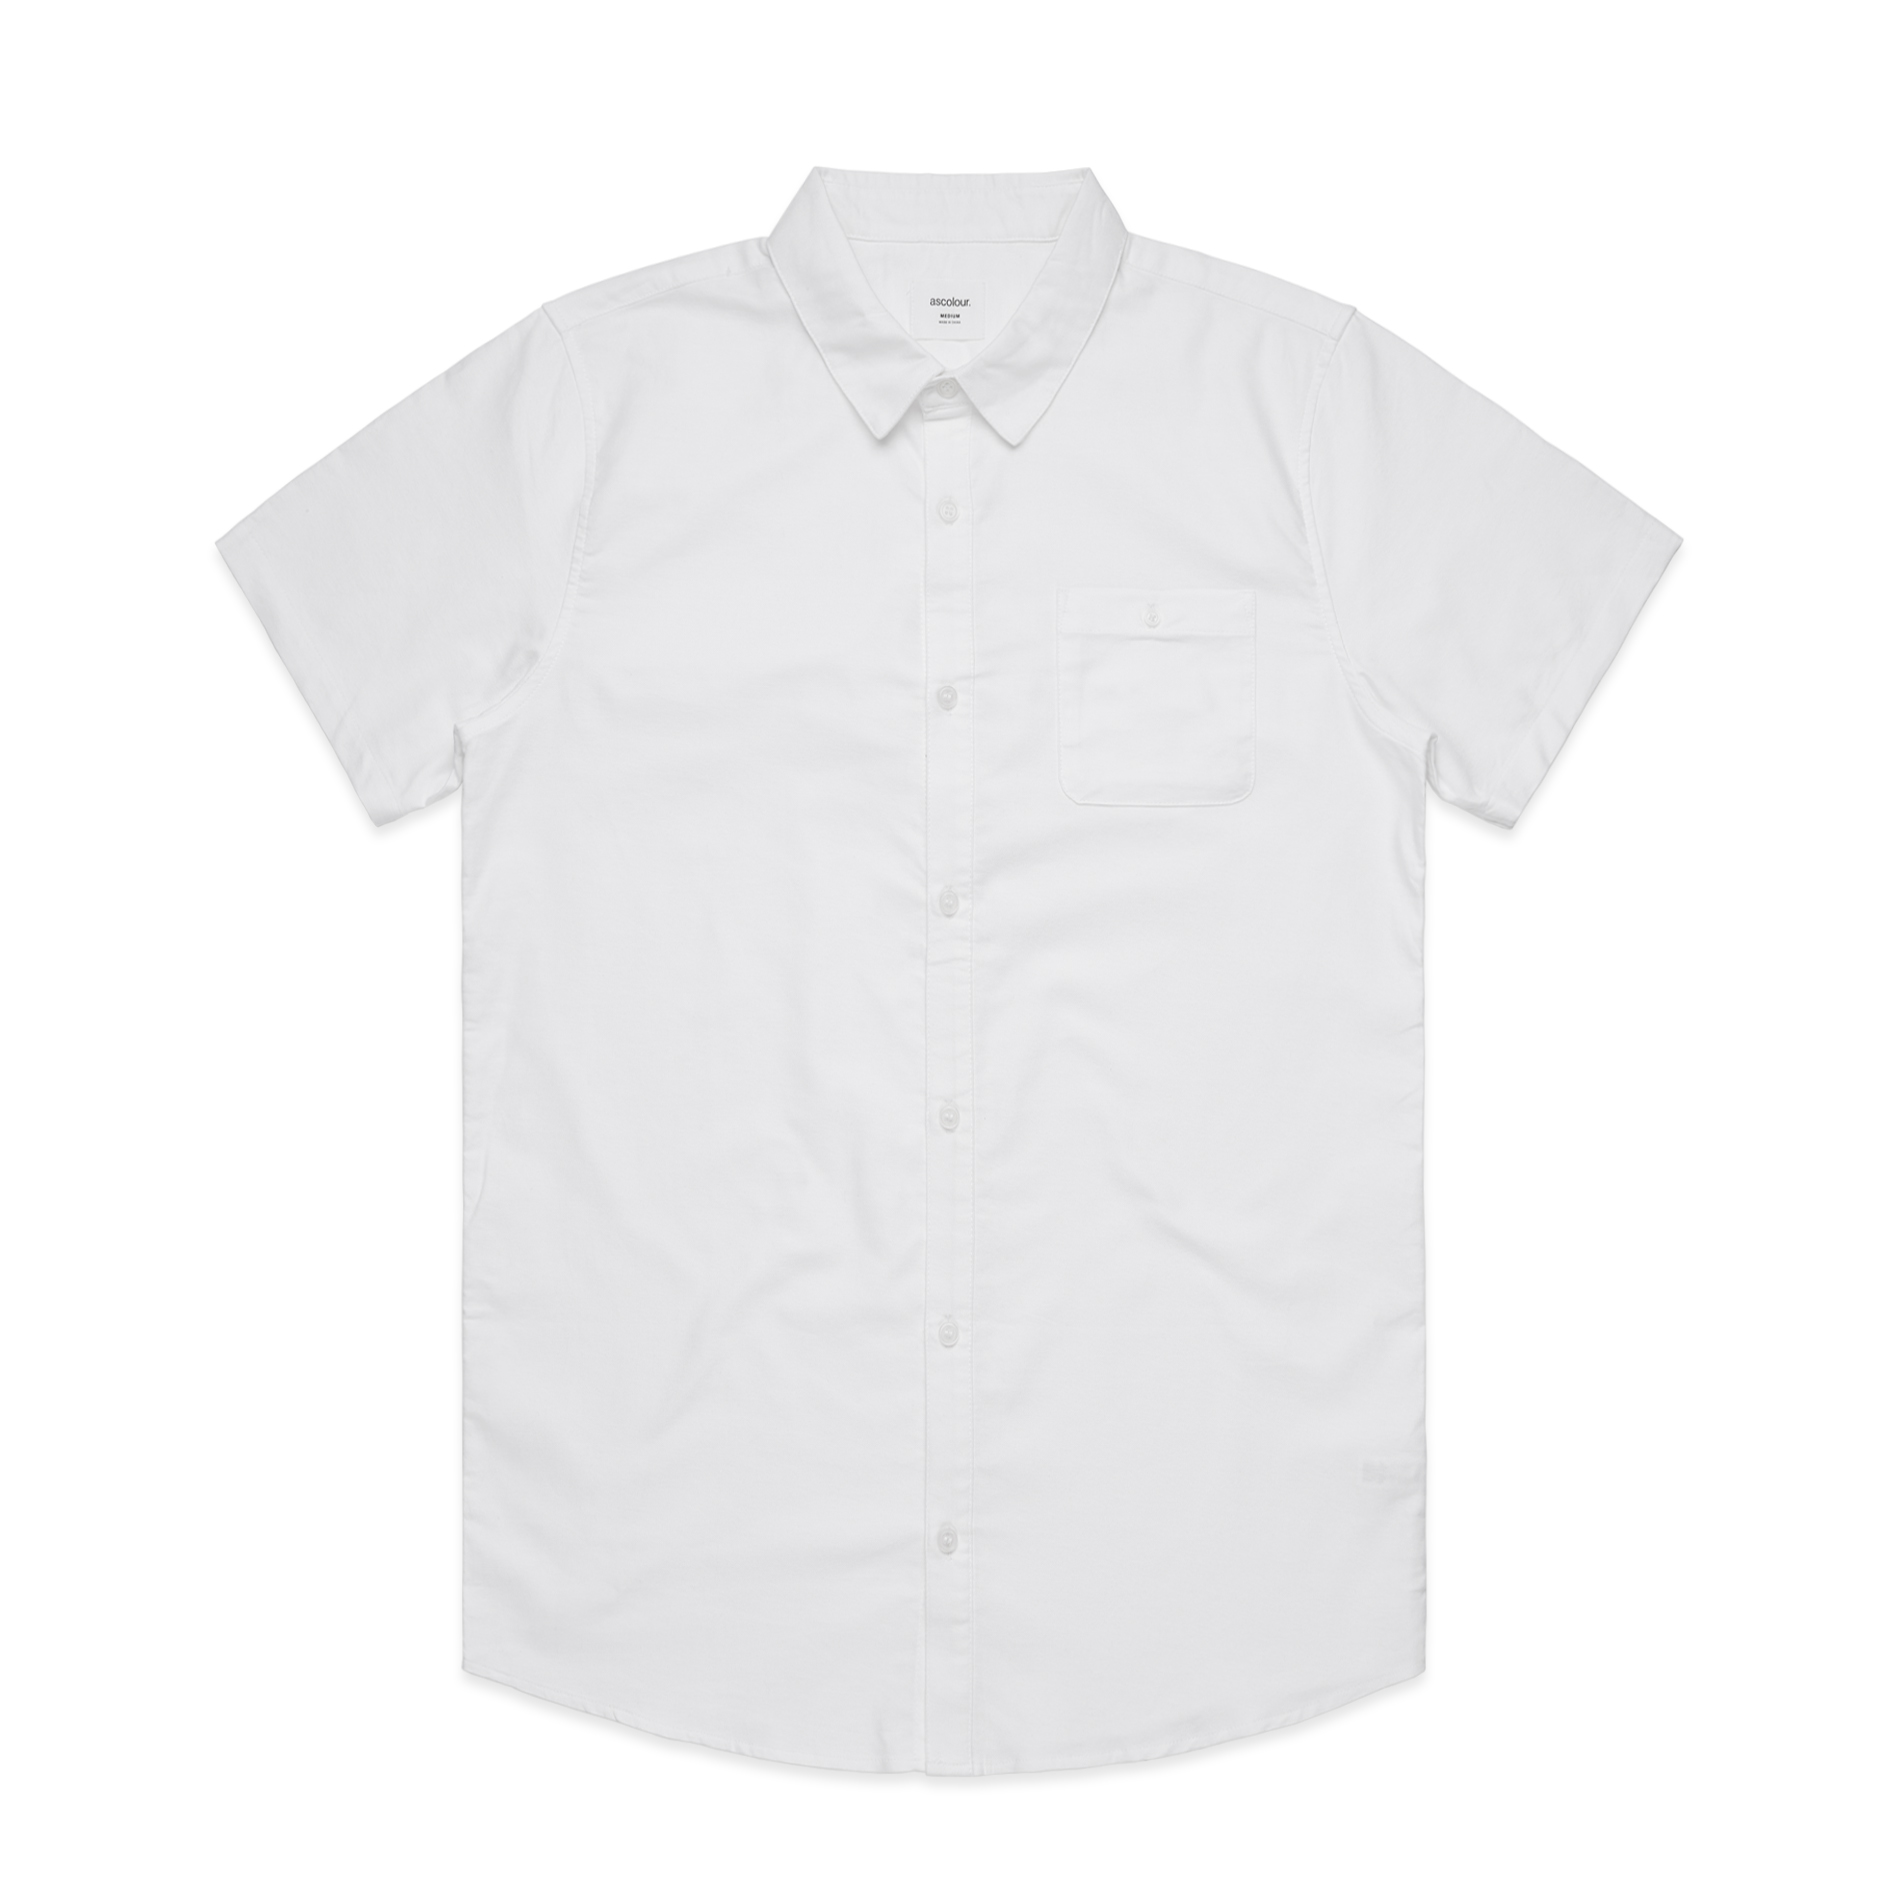 Oxford Shirt short sleeve - Image Group